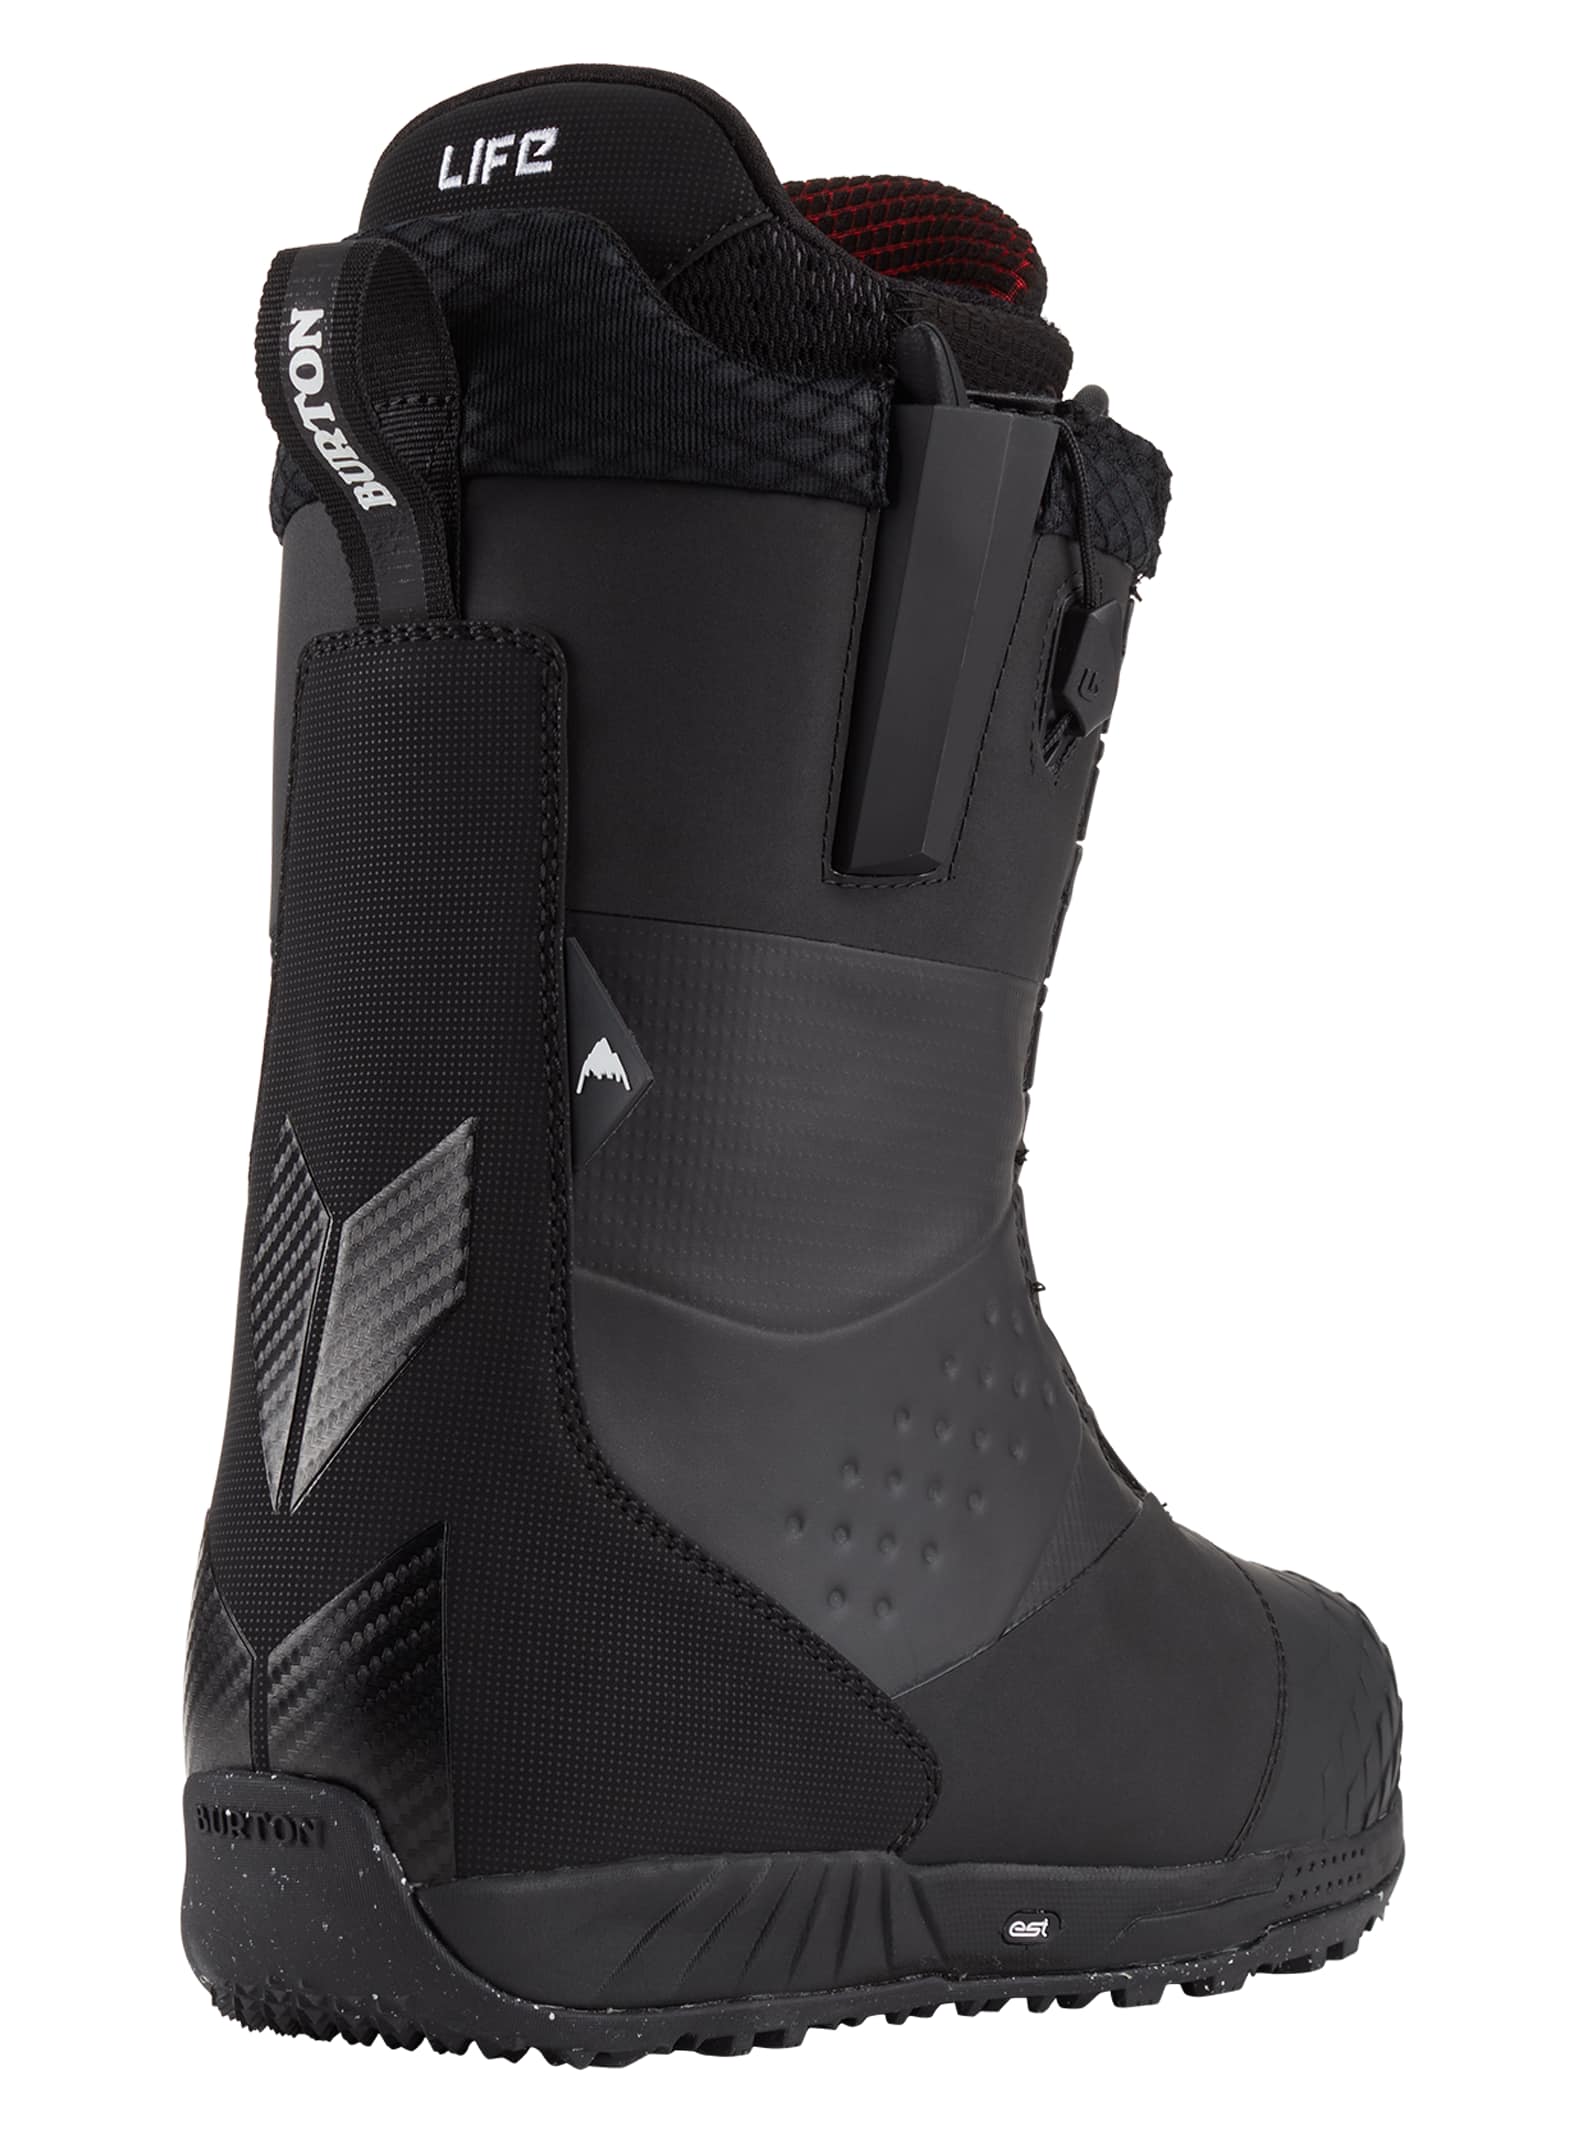 Men's Ion Snowboard Boots (Wide) | Burton.com Winter 2023 US